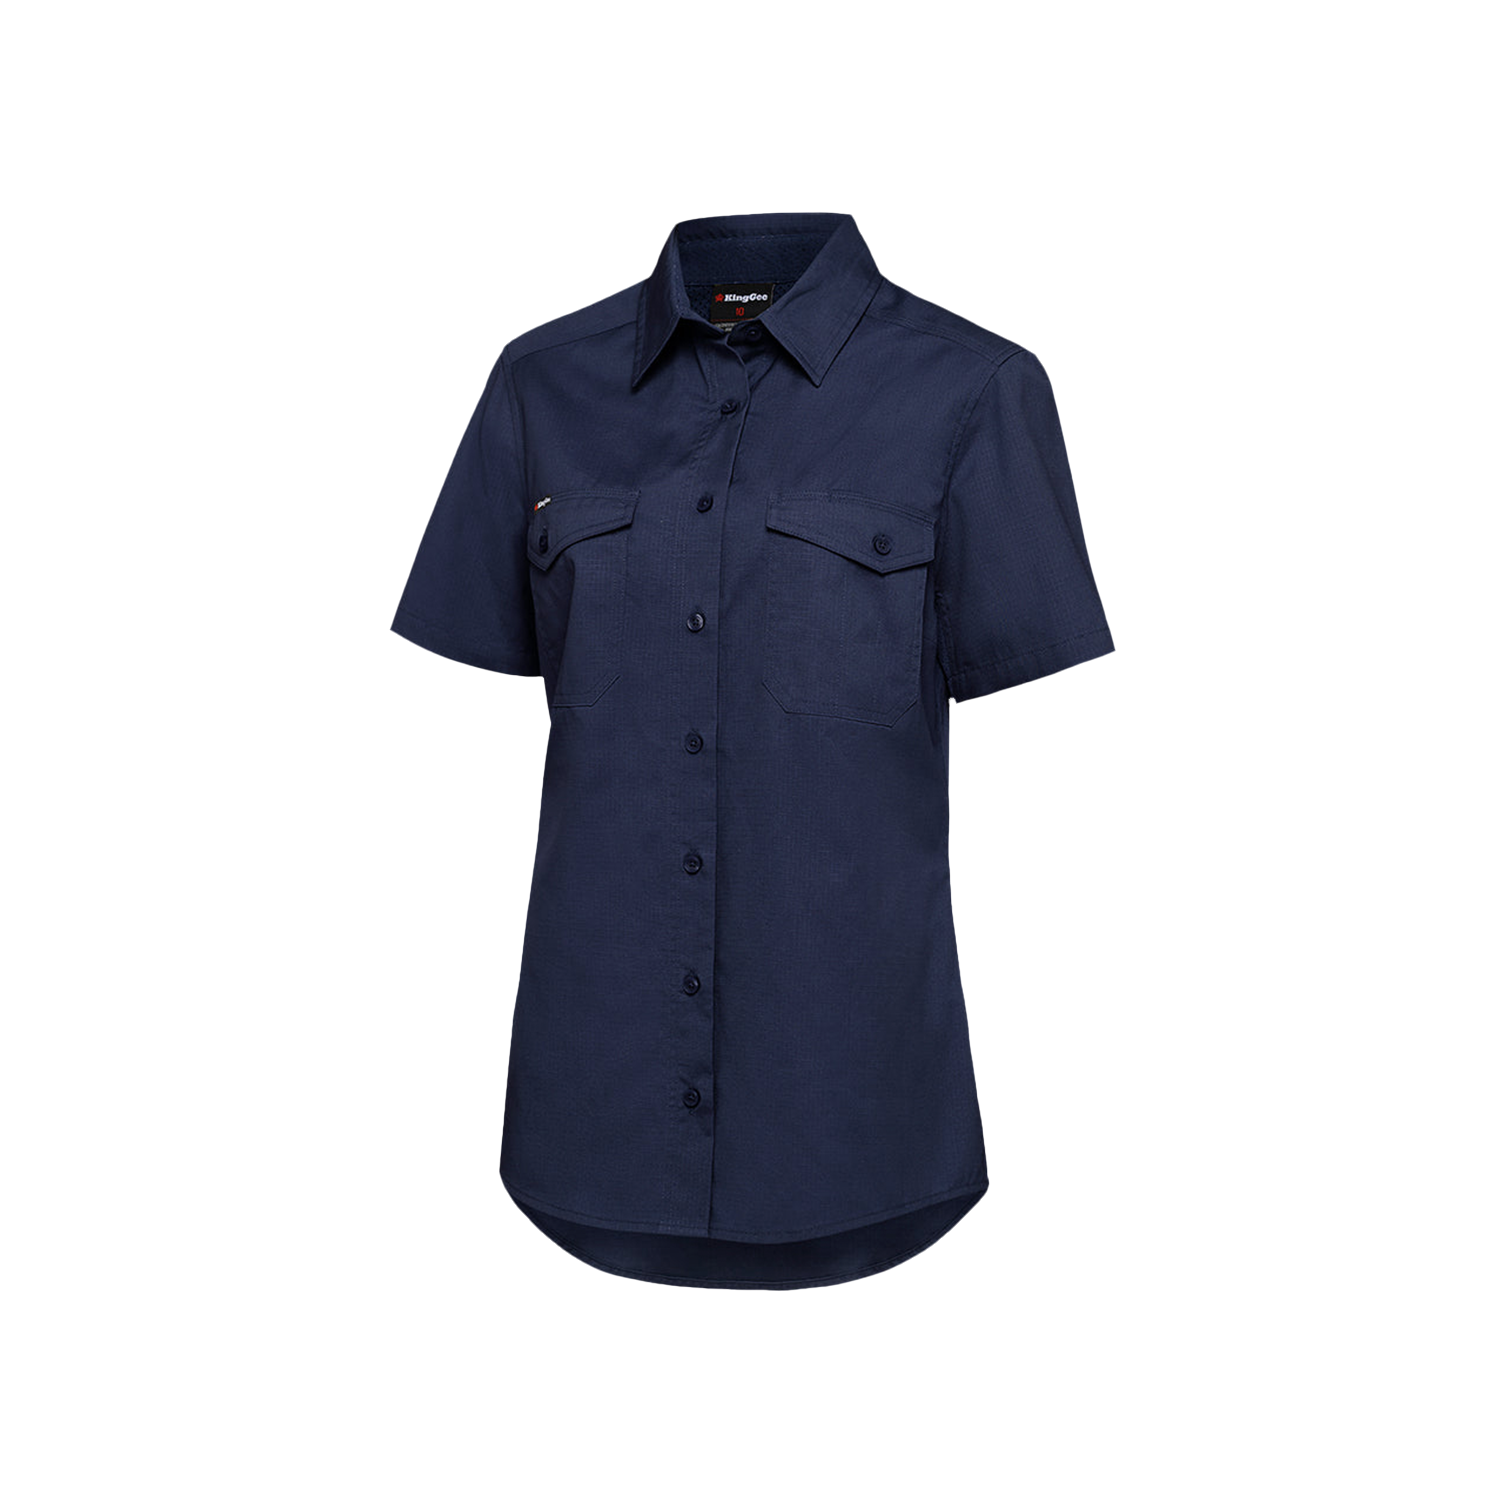 KingGee Women's Workcool 2 Short Sleeve Shirt - Navy - Totally Workwear